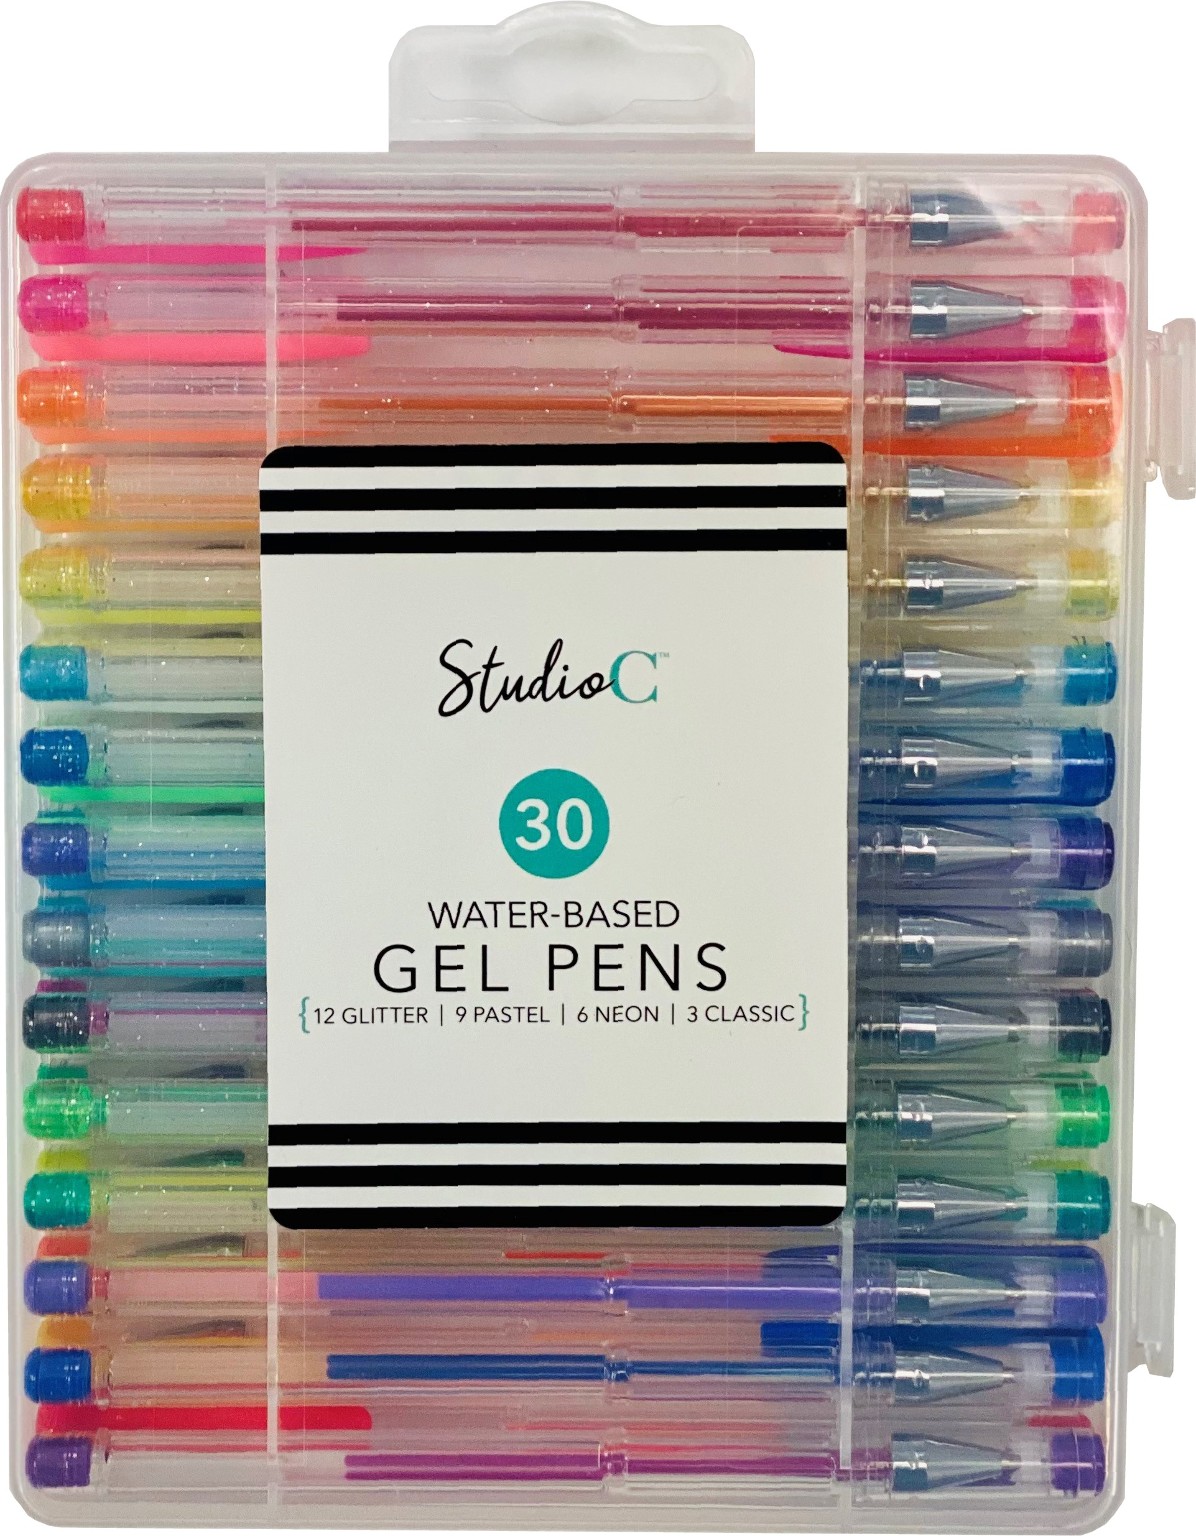 Color Gel Pens For Adult Coloring Books 30 Pack - Premium